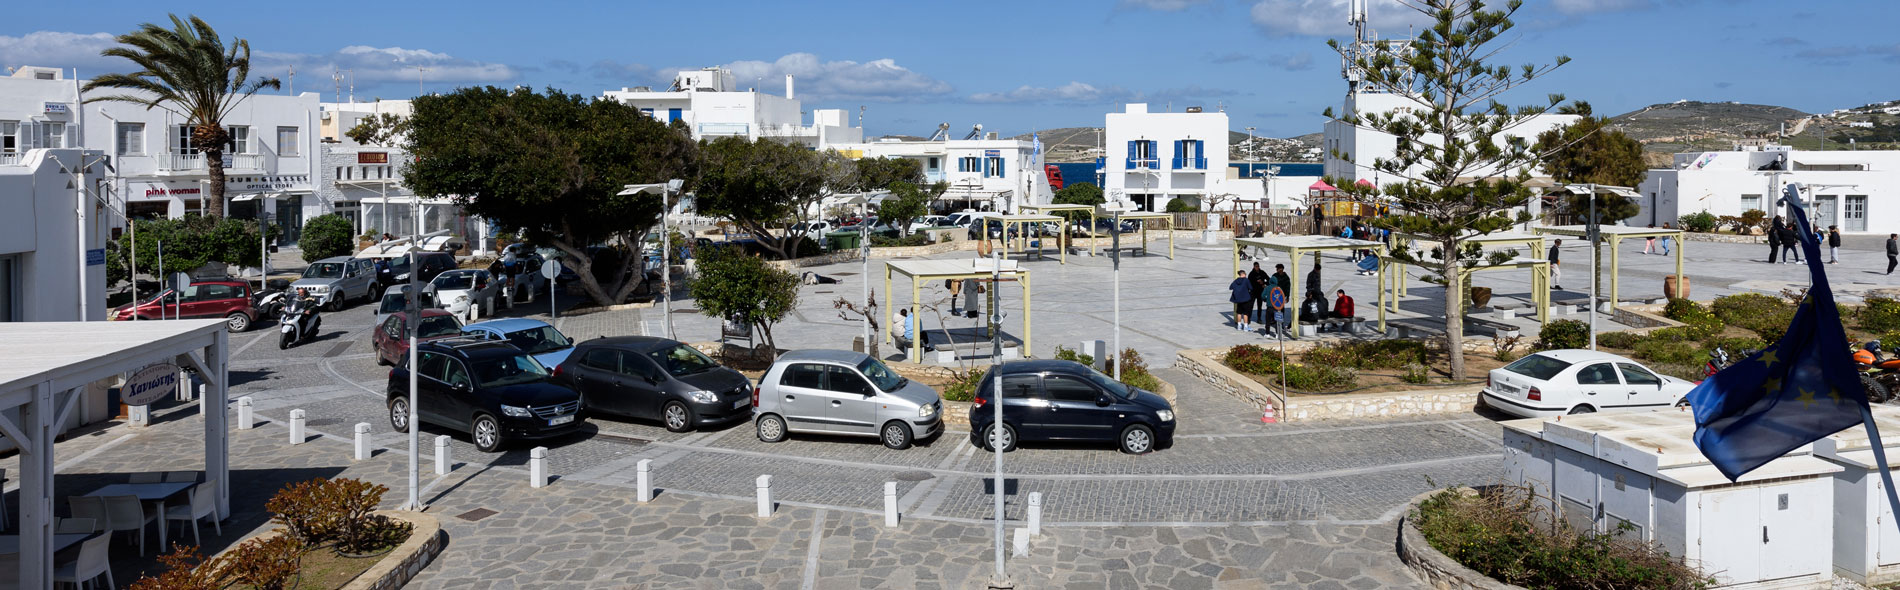 Central square Manto Mavrogenous, Parikia, Paros